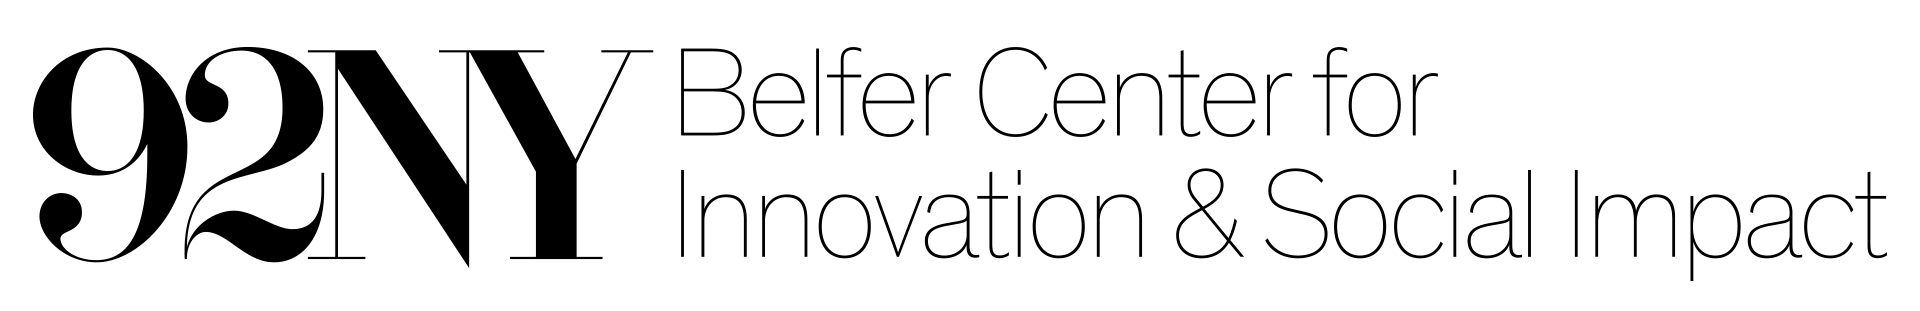 92NY-BelferCenter-logo.png